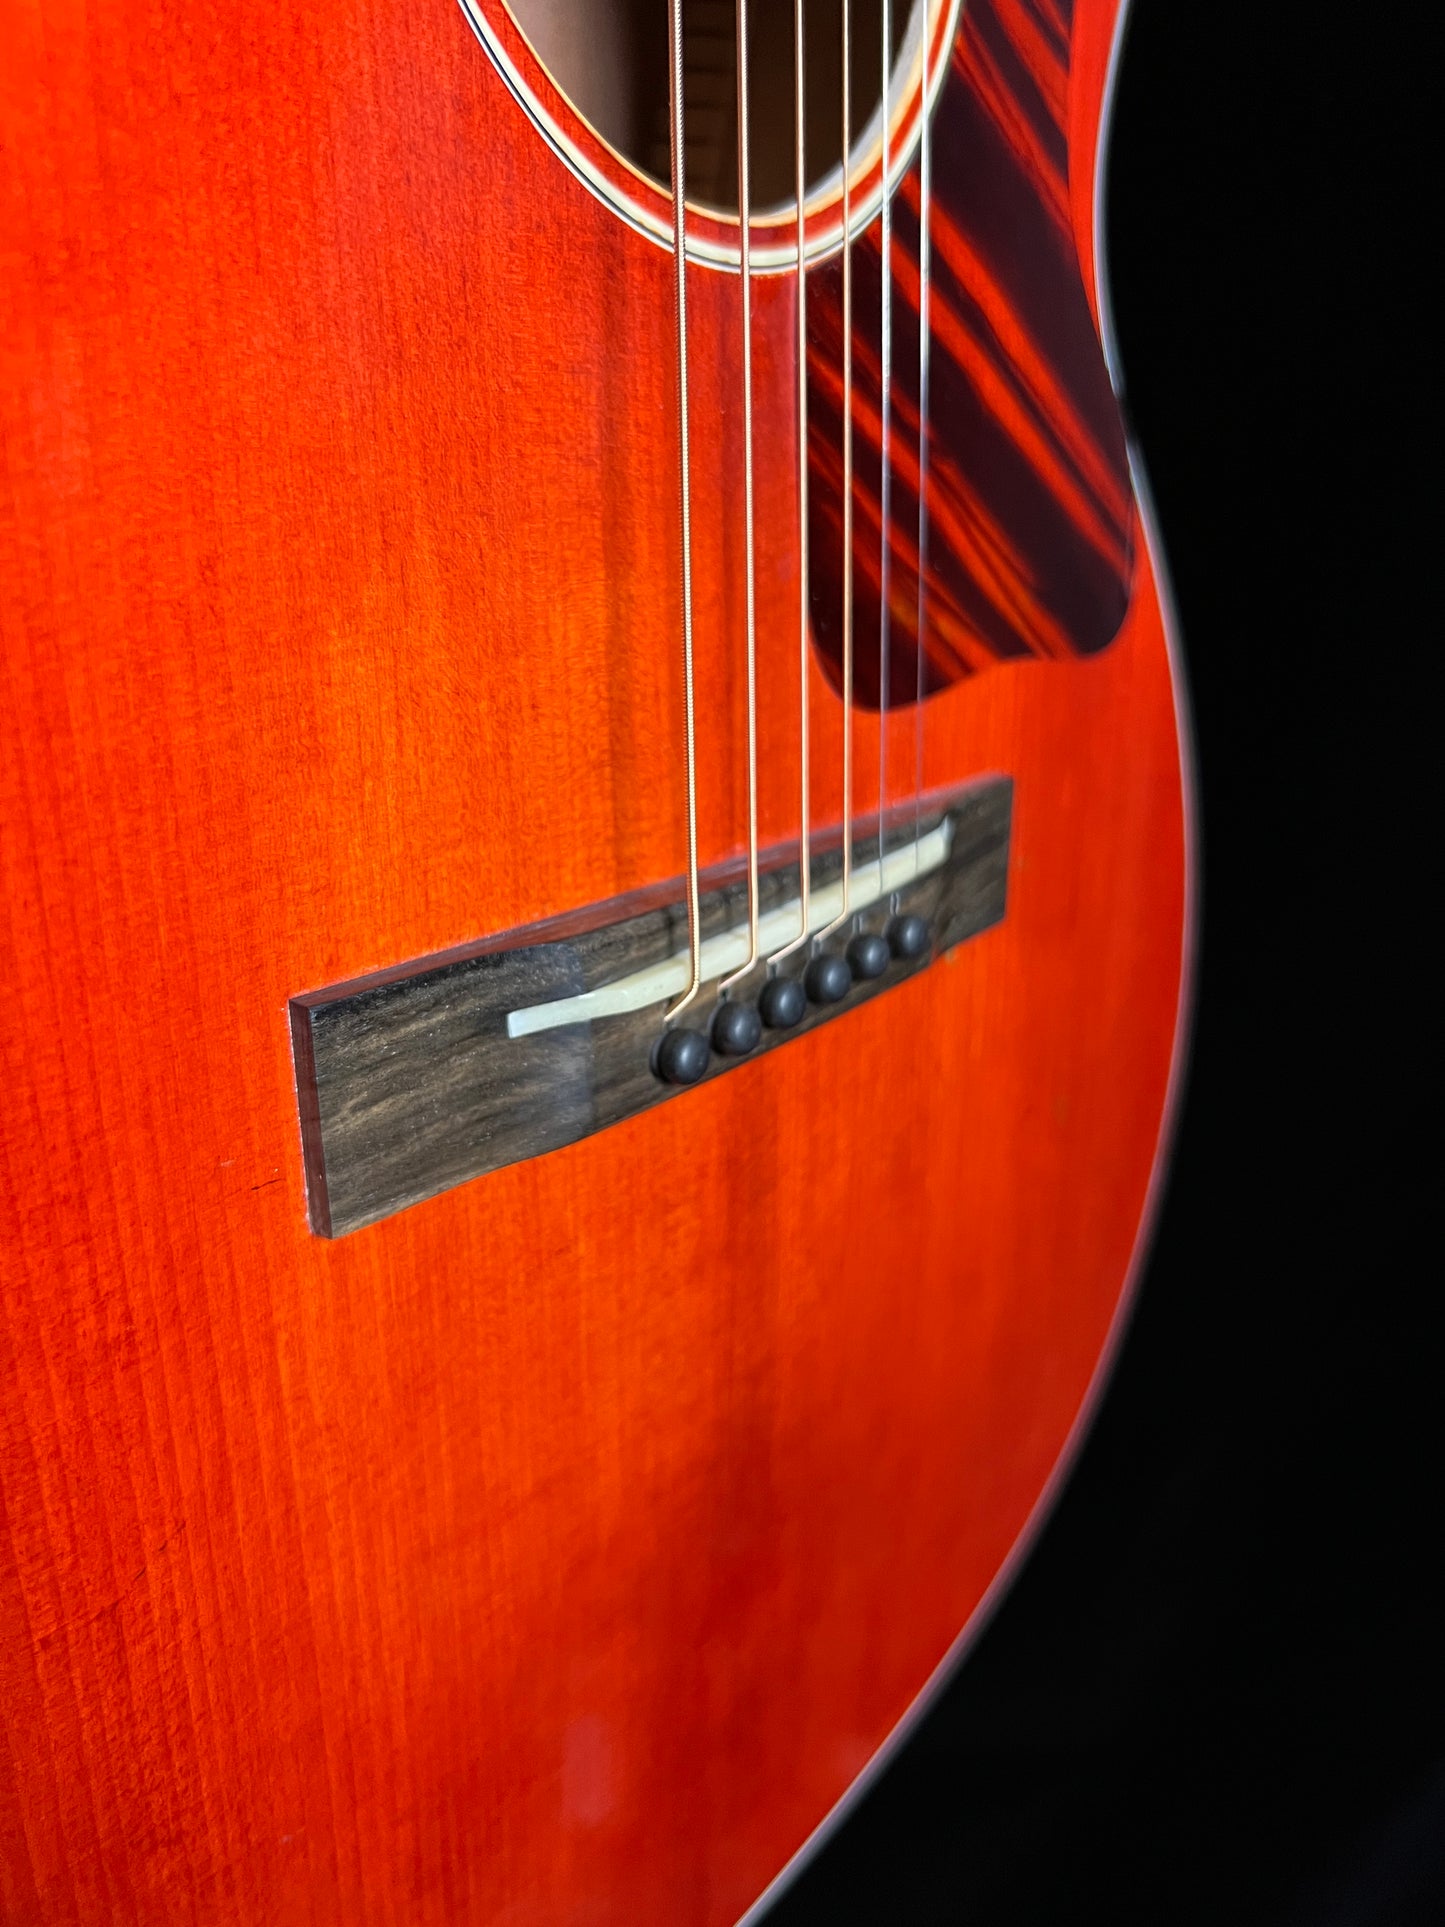 Eastman E10OOSS/V Adirondack Spruce/Mahogany Varnish Acoustic Guitar - New